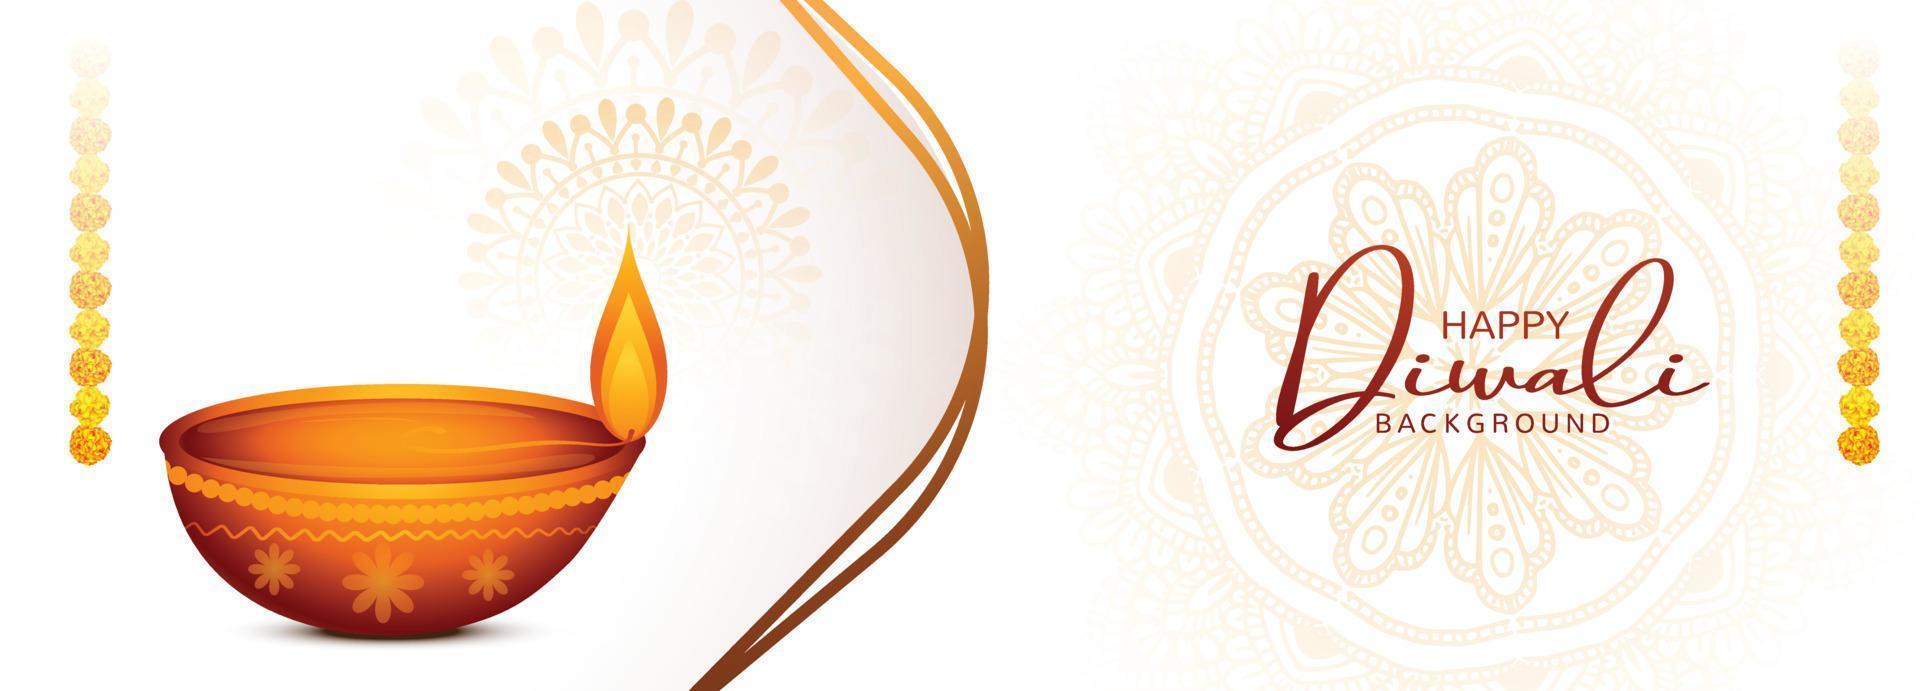 elegante diseño de tarjeta de banner feliz diwali vector